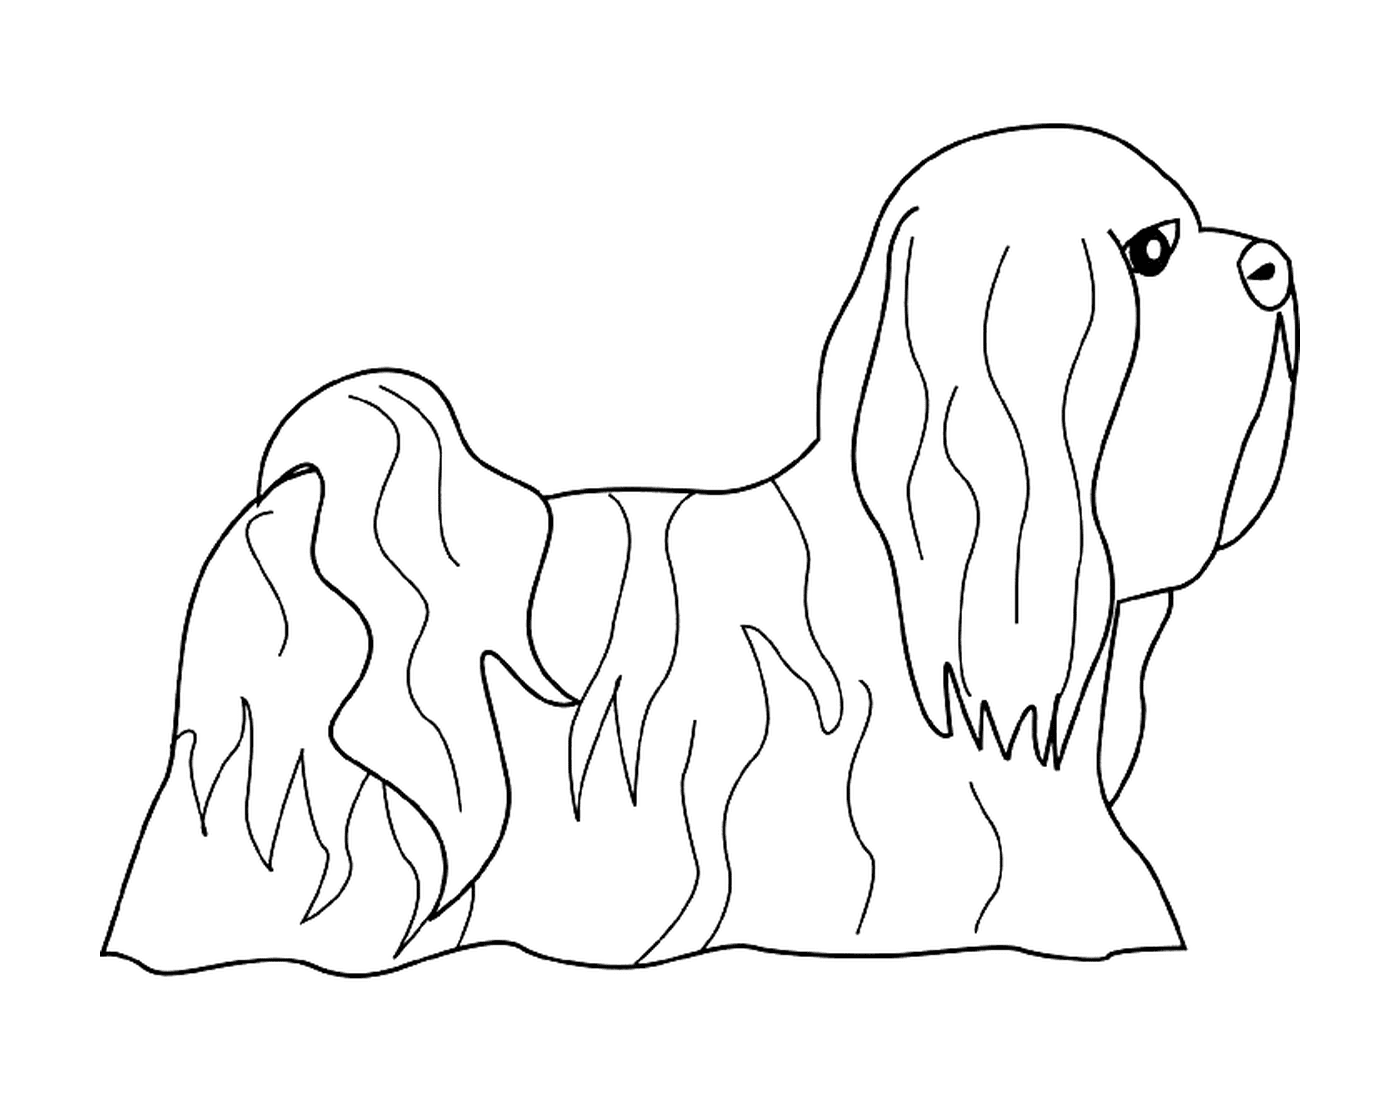  A dog lhasa apso 